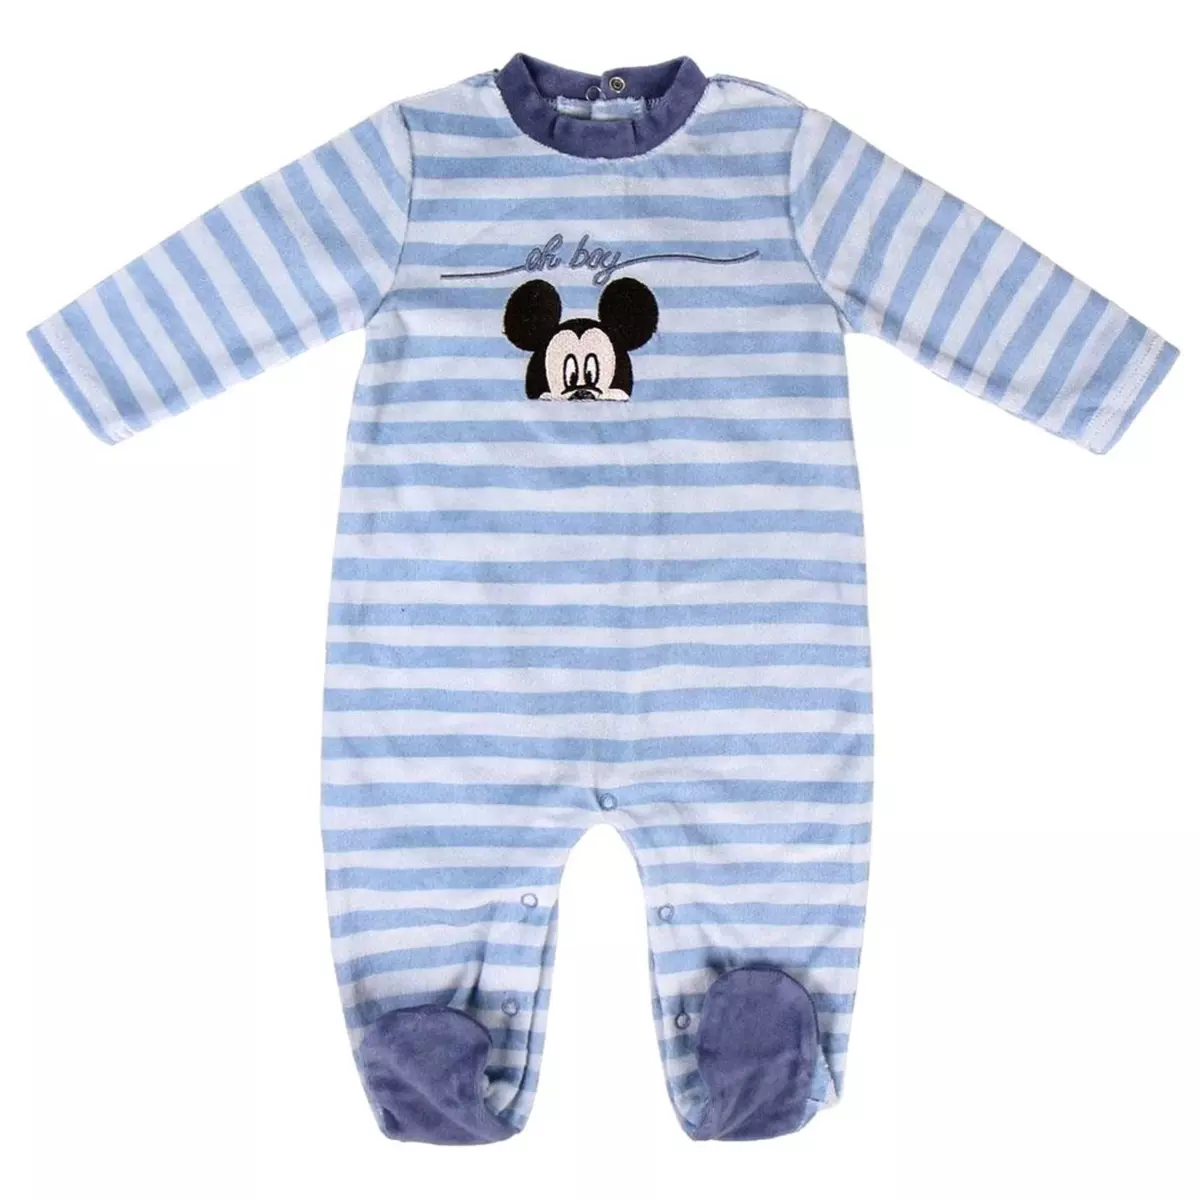 DISNEY Dors bien Mickey taille 6 mois Pyjamas bebe cadeau naissance